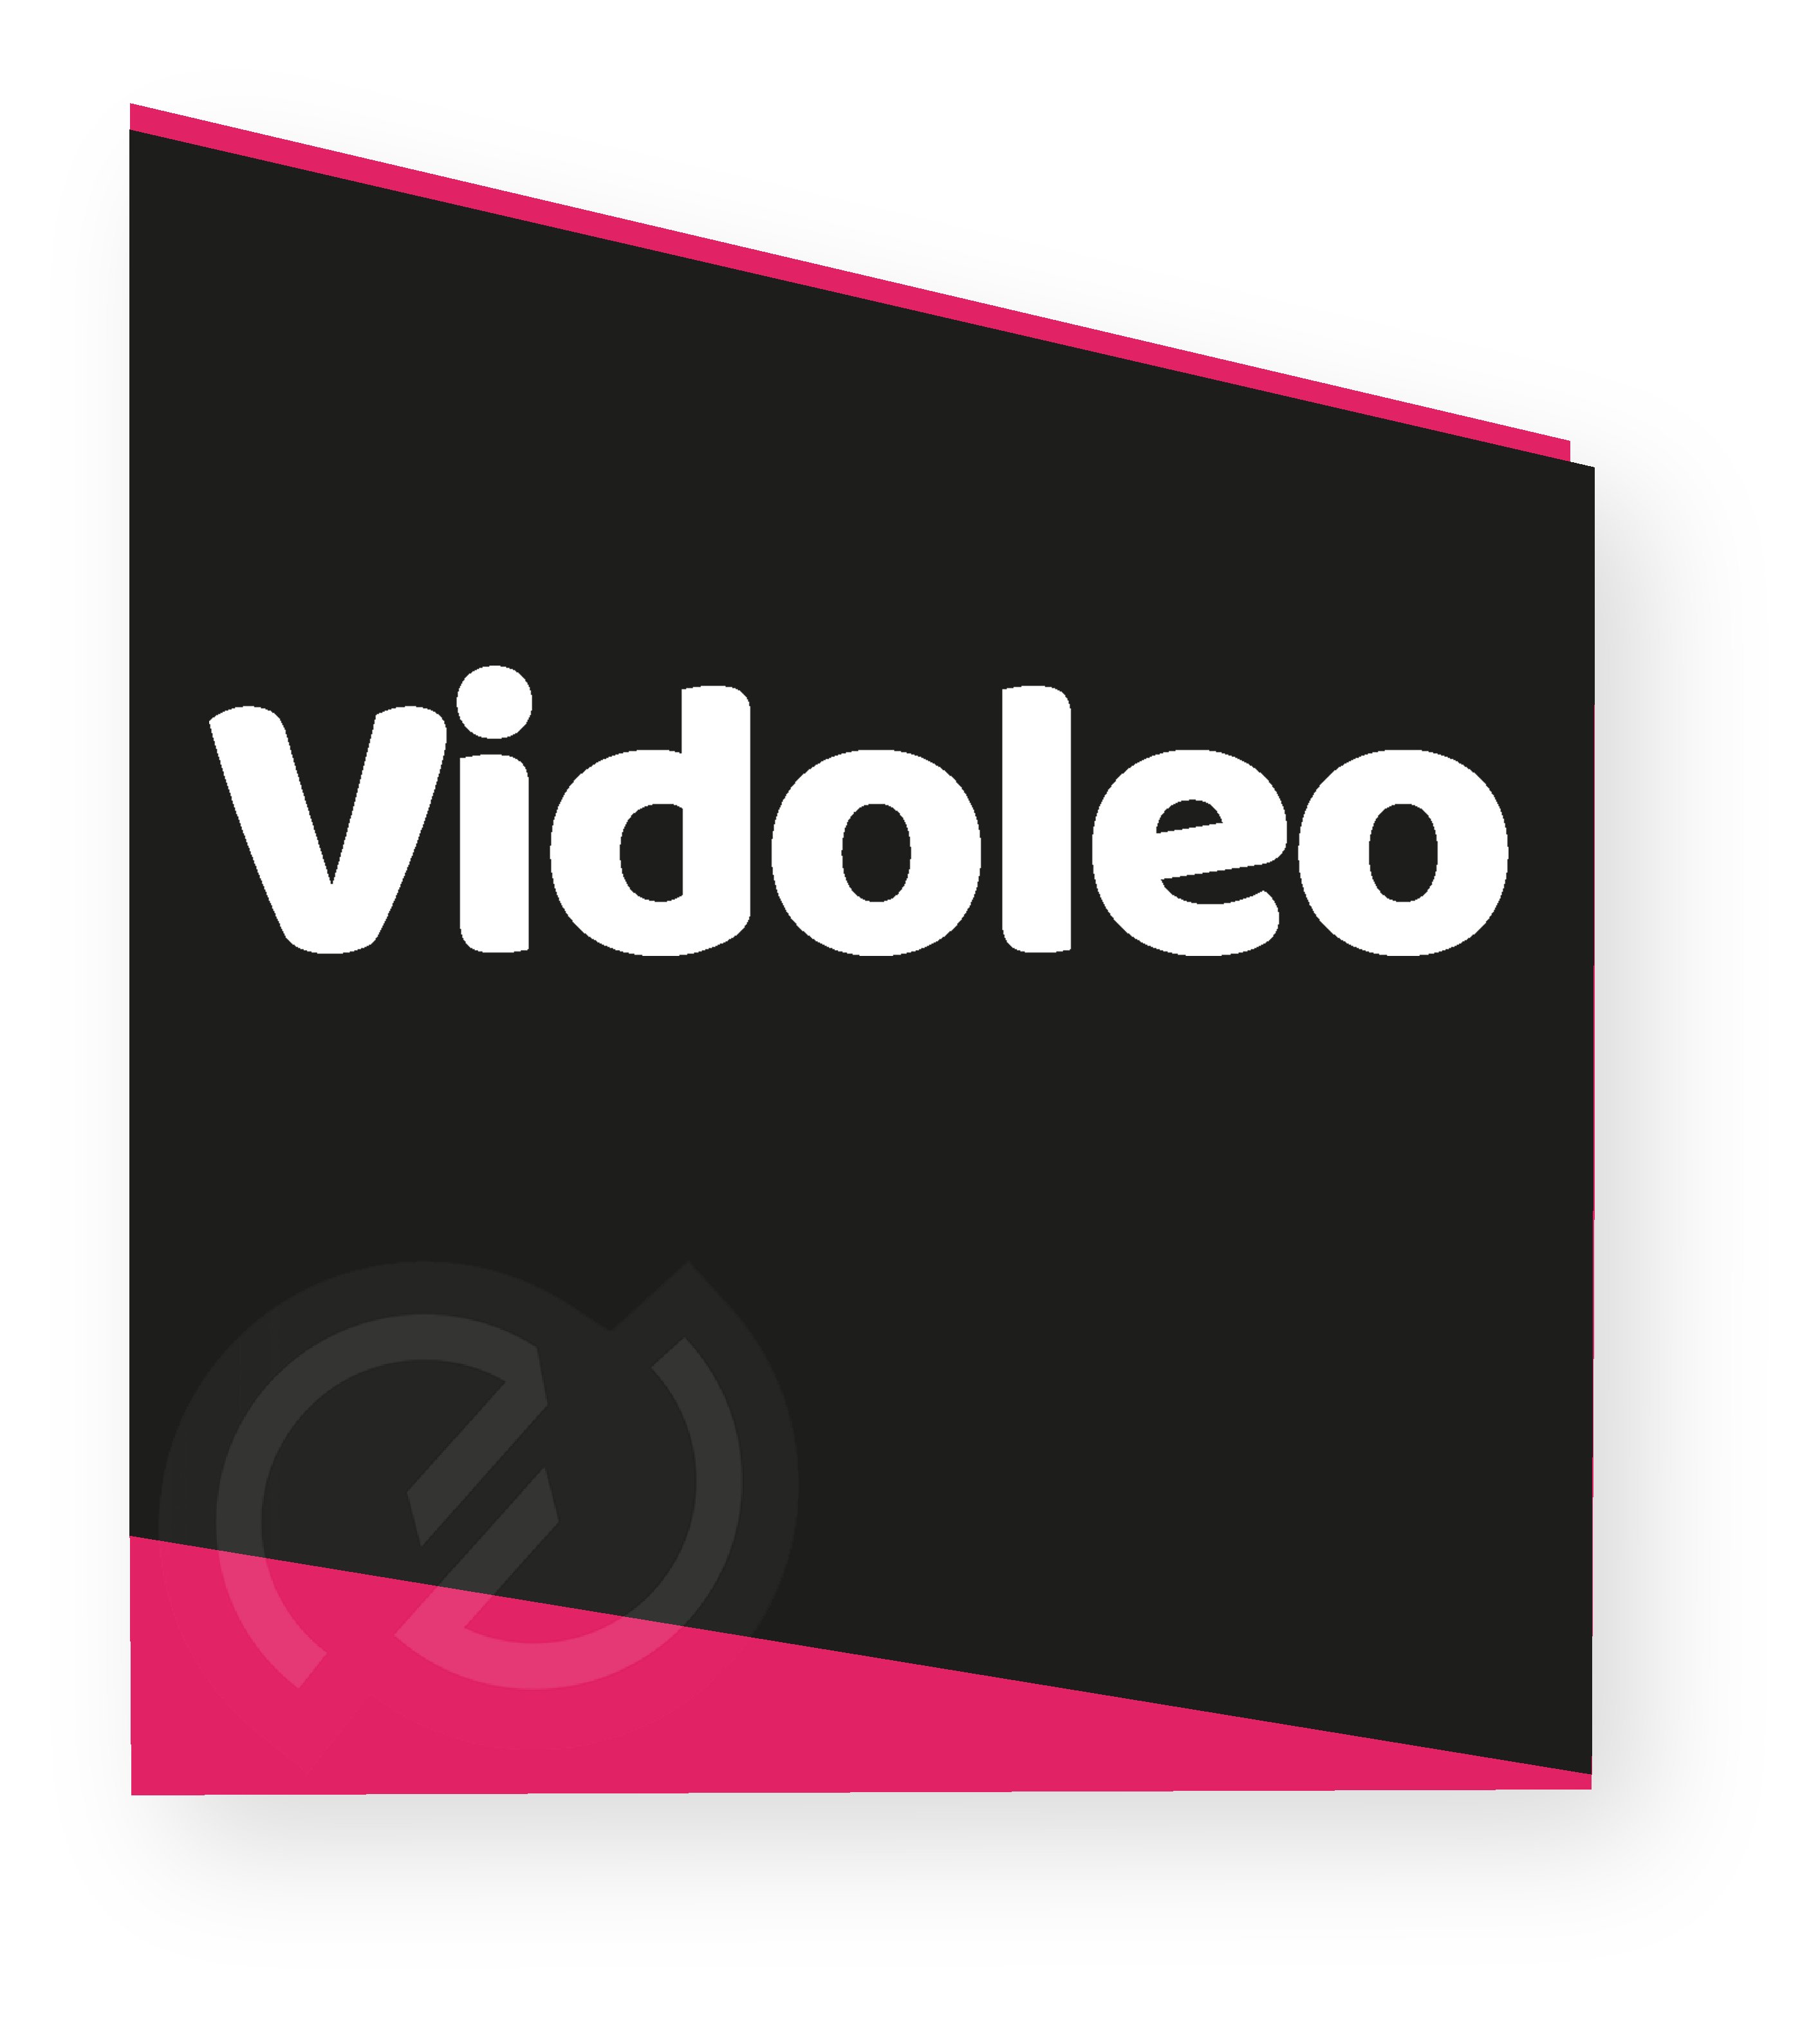 Image logo Vidoleo